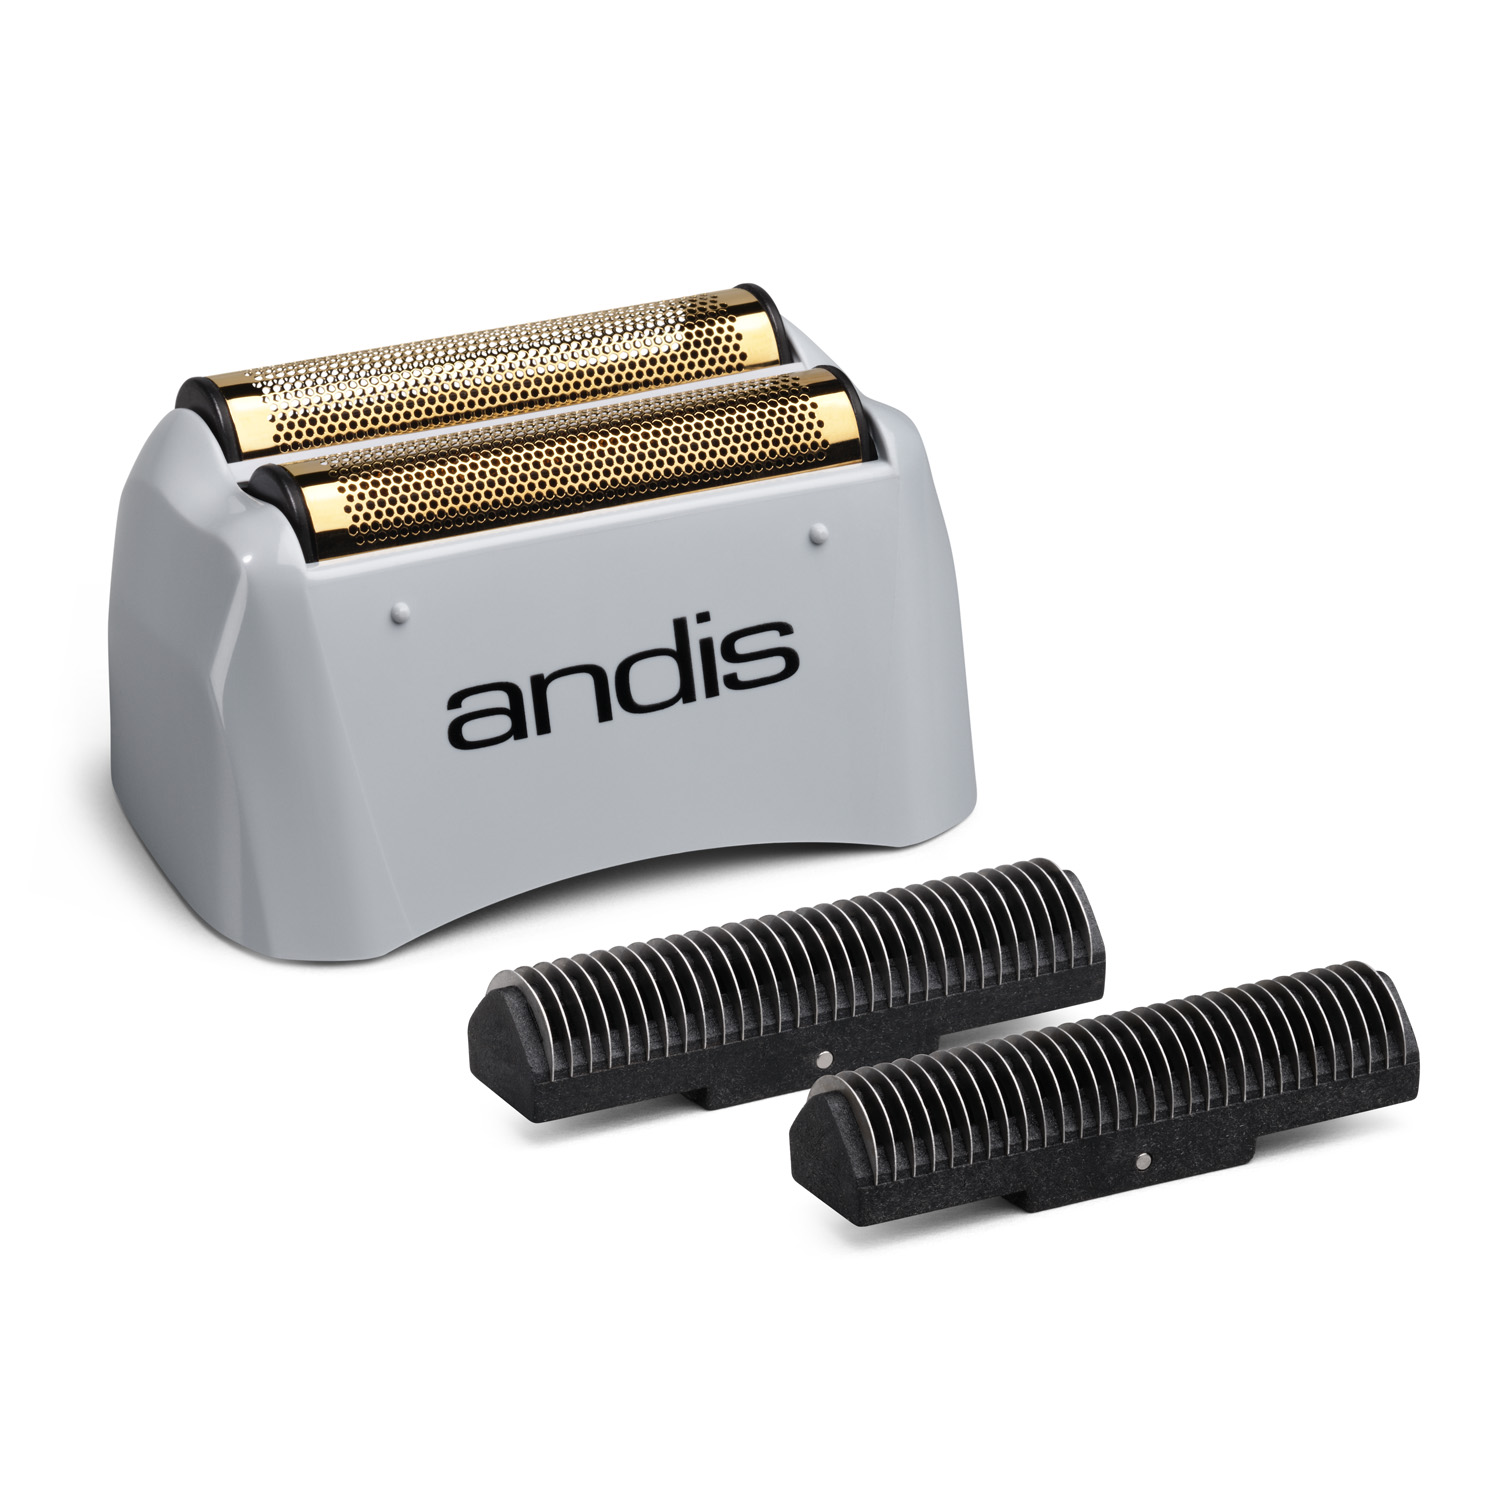 Andis Foil & Cutter for Profoil Shaver 17 280 - náhradní holicí hlava na holicí strojek Andis ProFoil Shaver